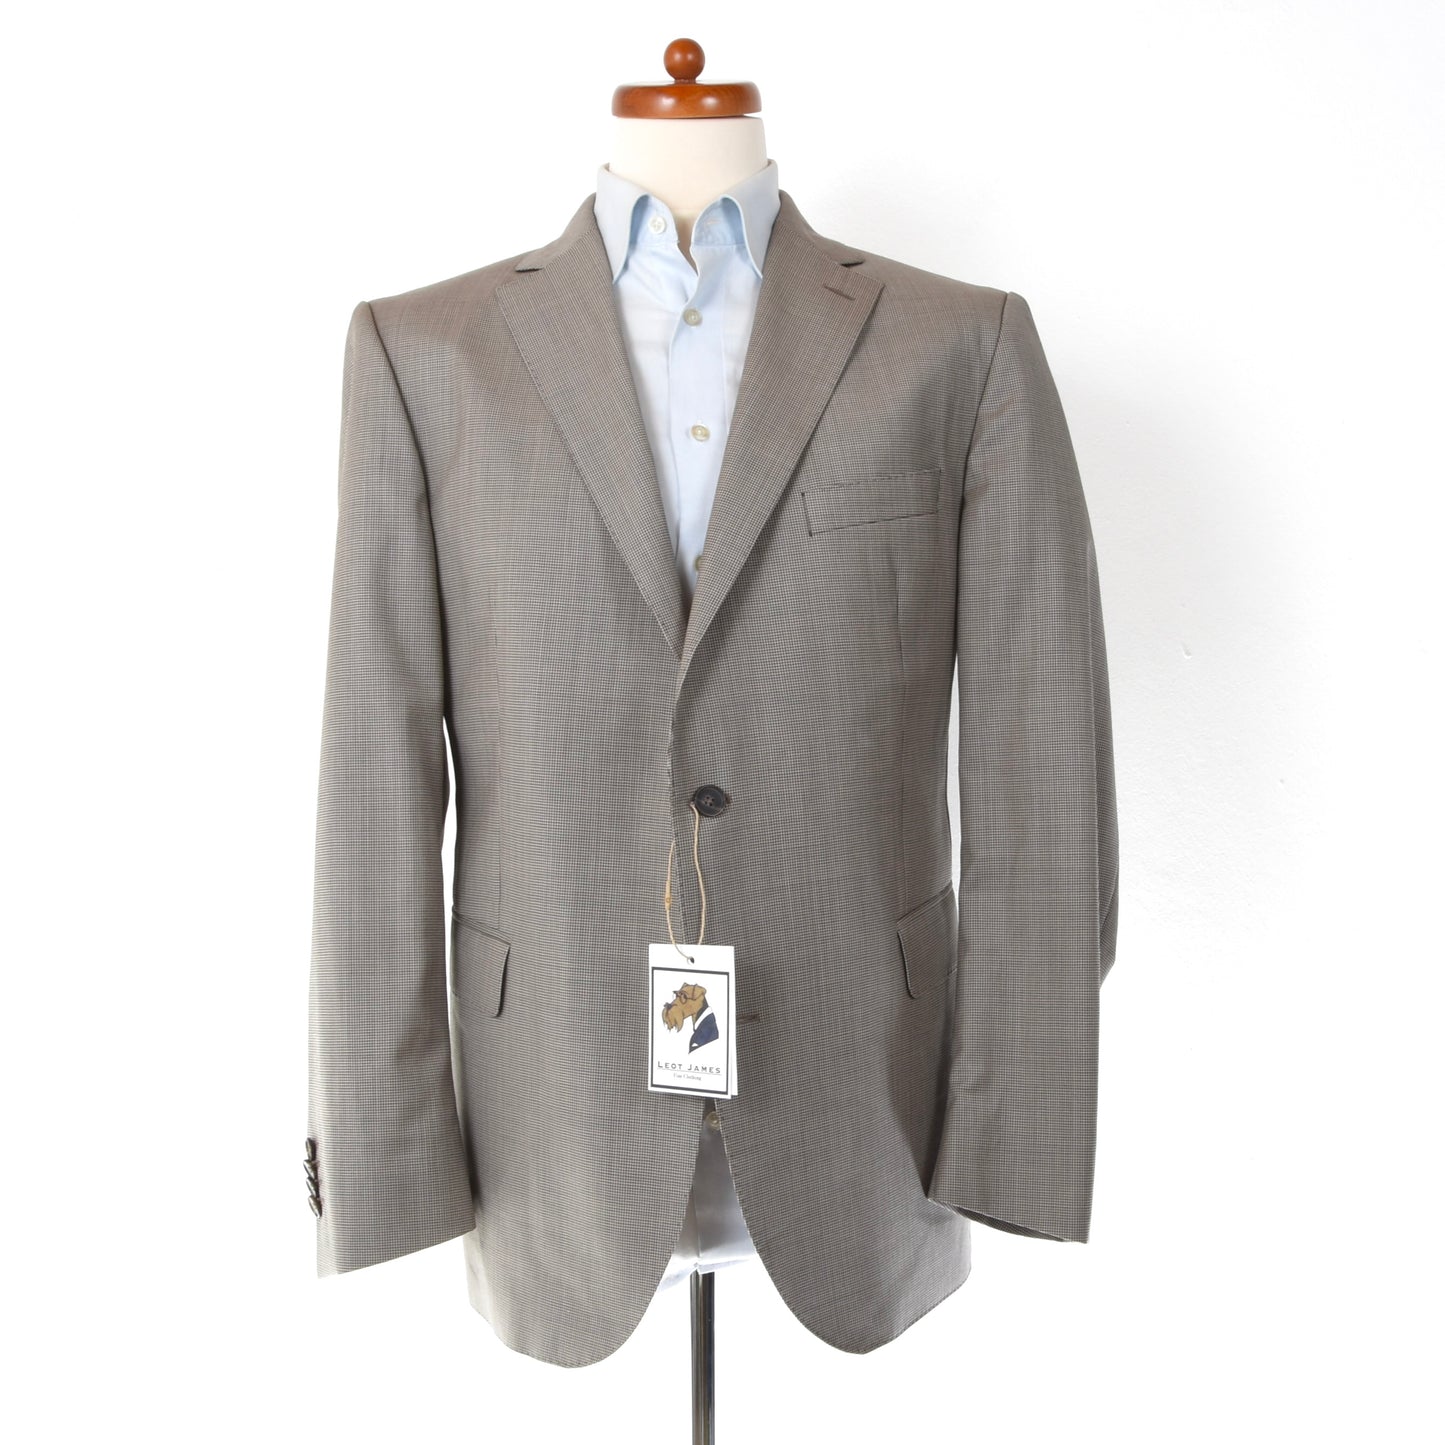 House of Gentlemen x Dressler Super 110s Suit Size 26 Shaped Fit - Houndstooth